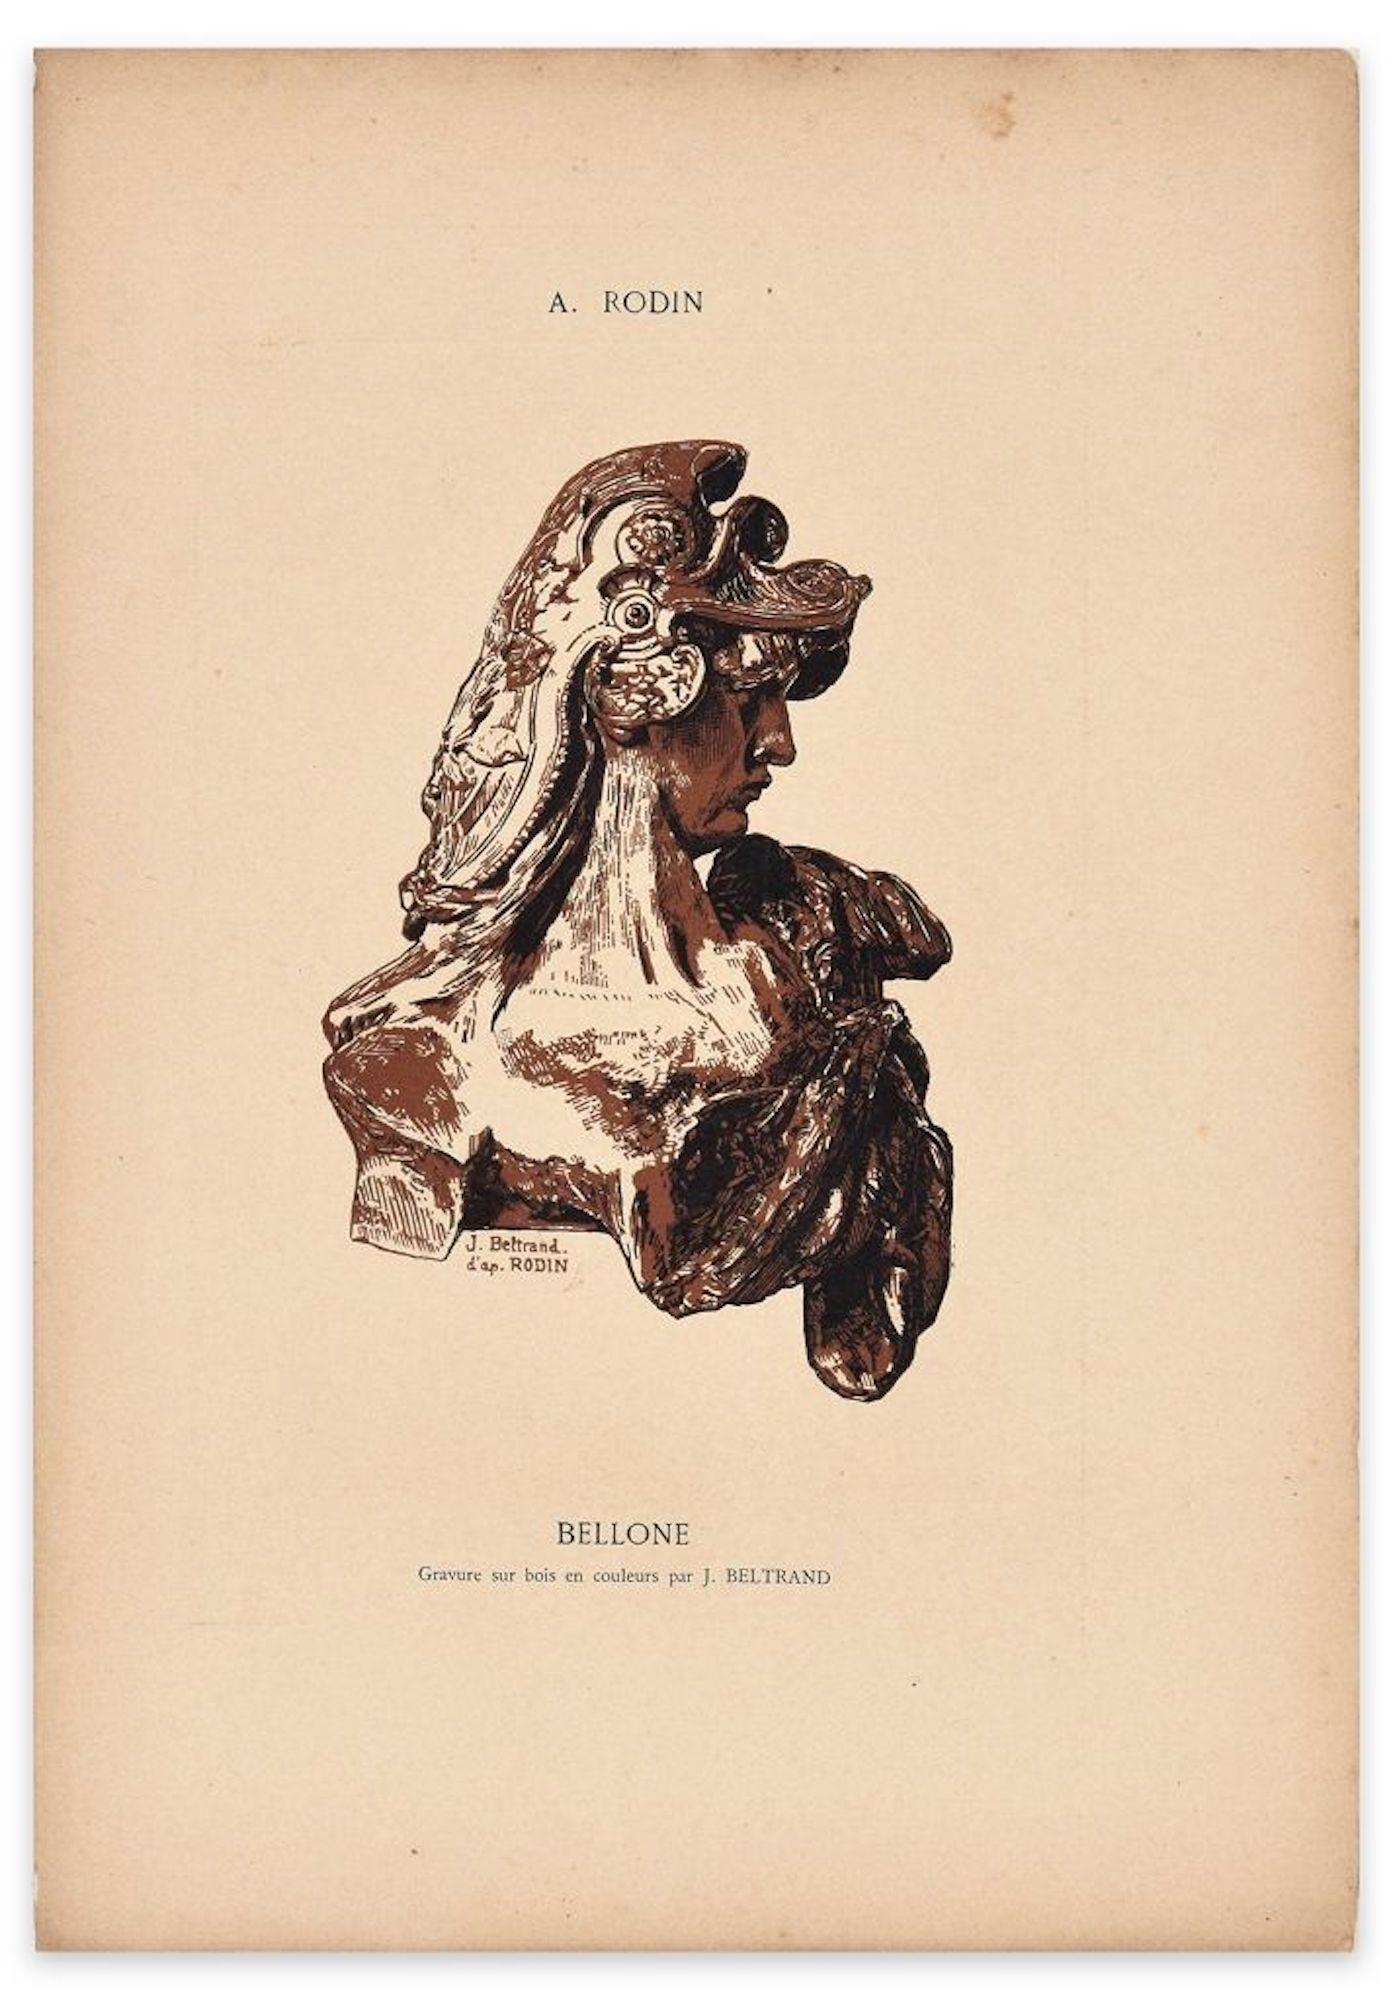 Jacques Beltrand Figurative Print - Bellone - Original Woodcut by J. Beltrand After A. Rodin - Early 20th Century